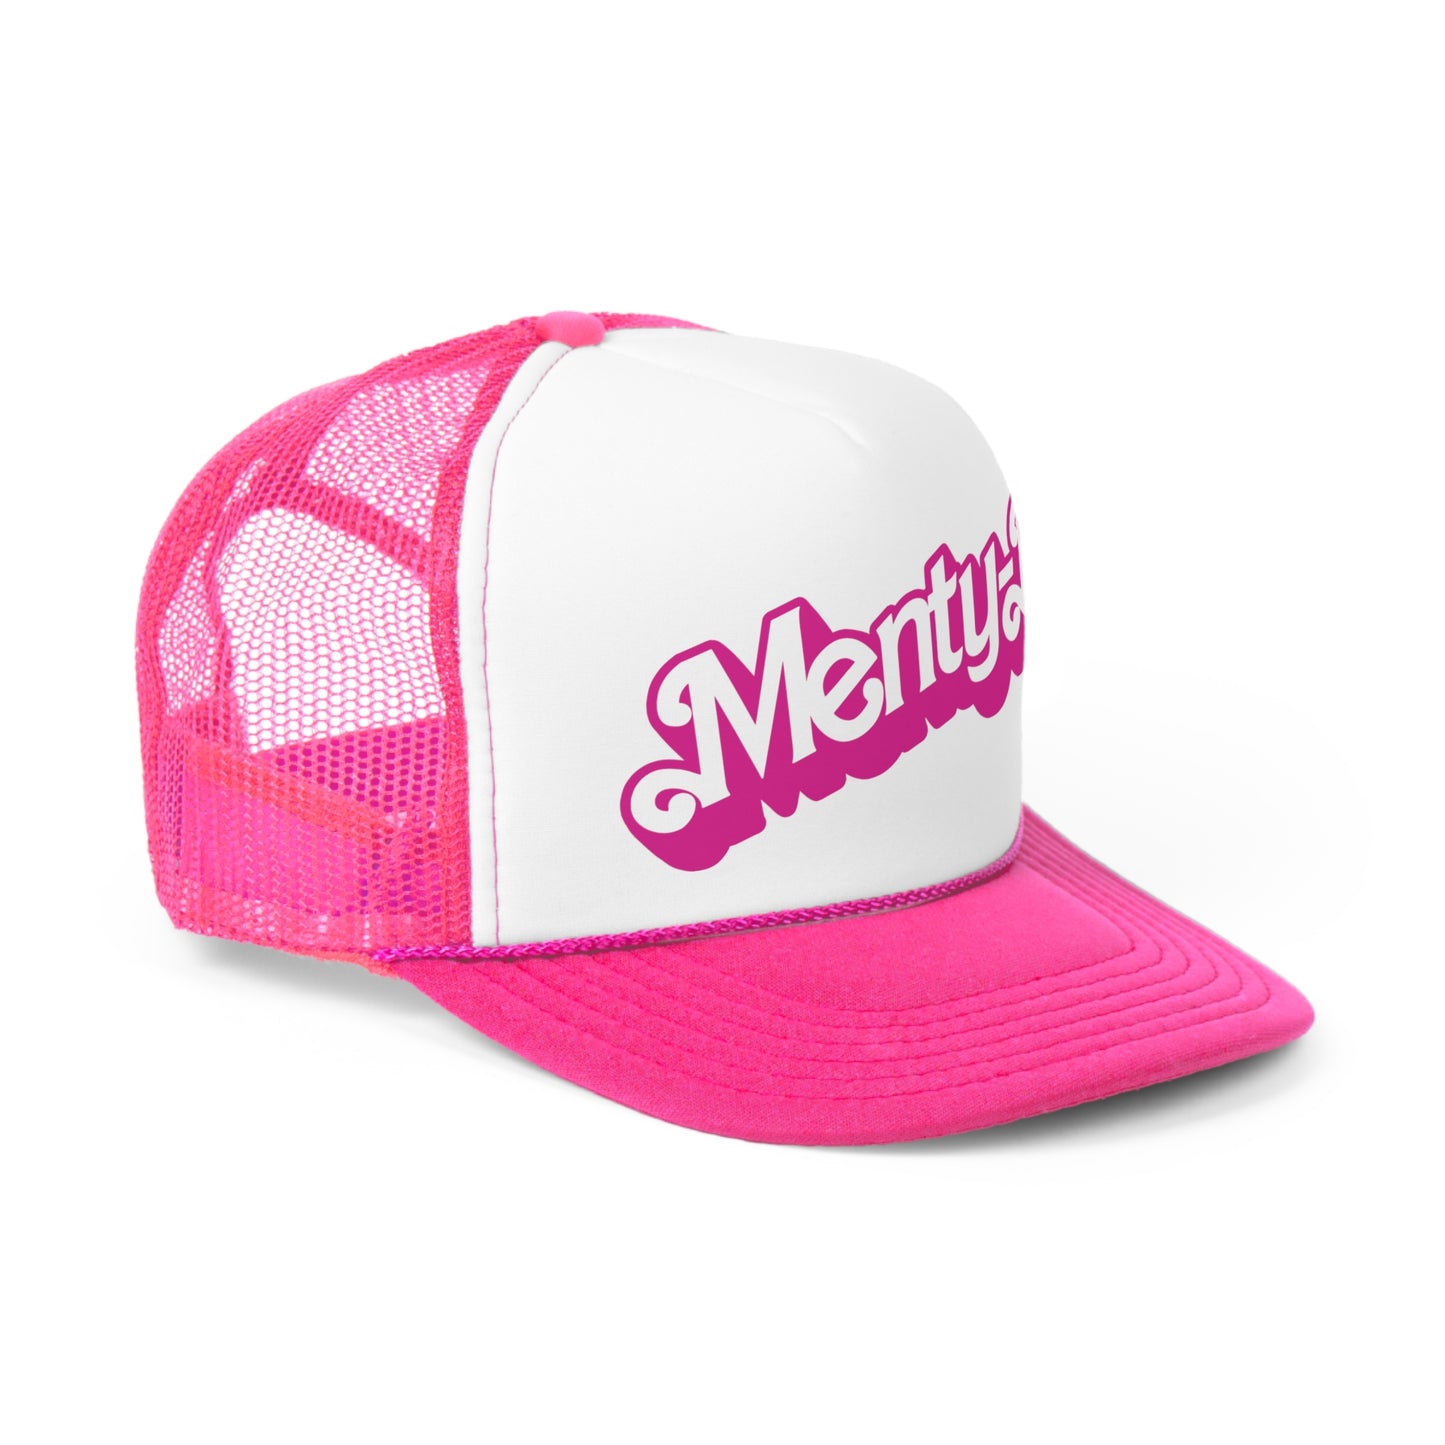 Menty-B Doll trucker hat